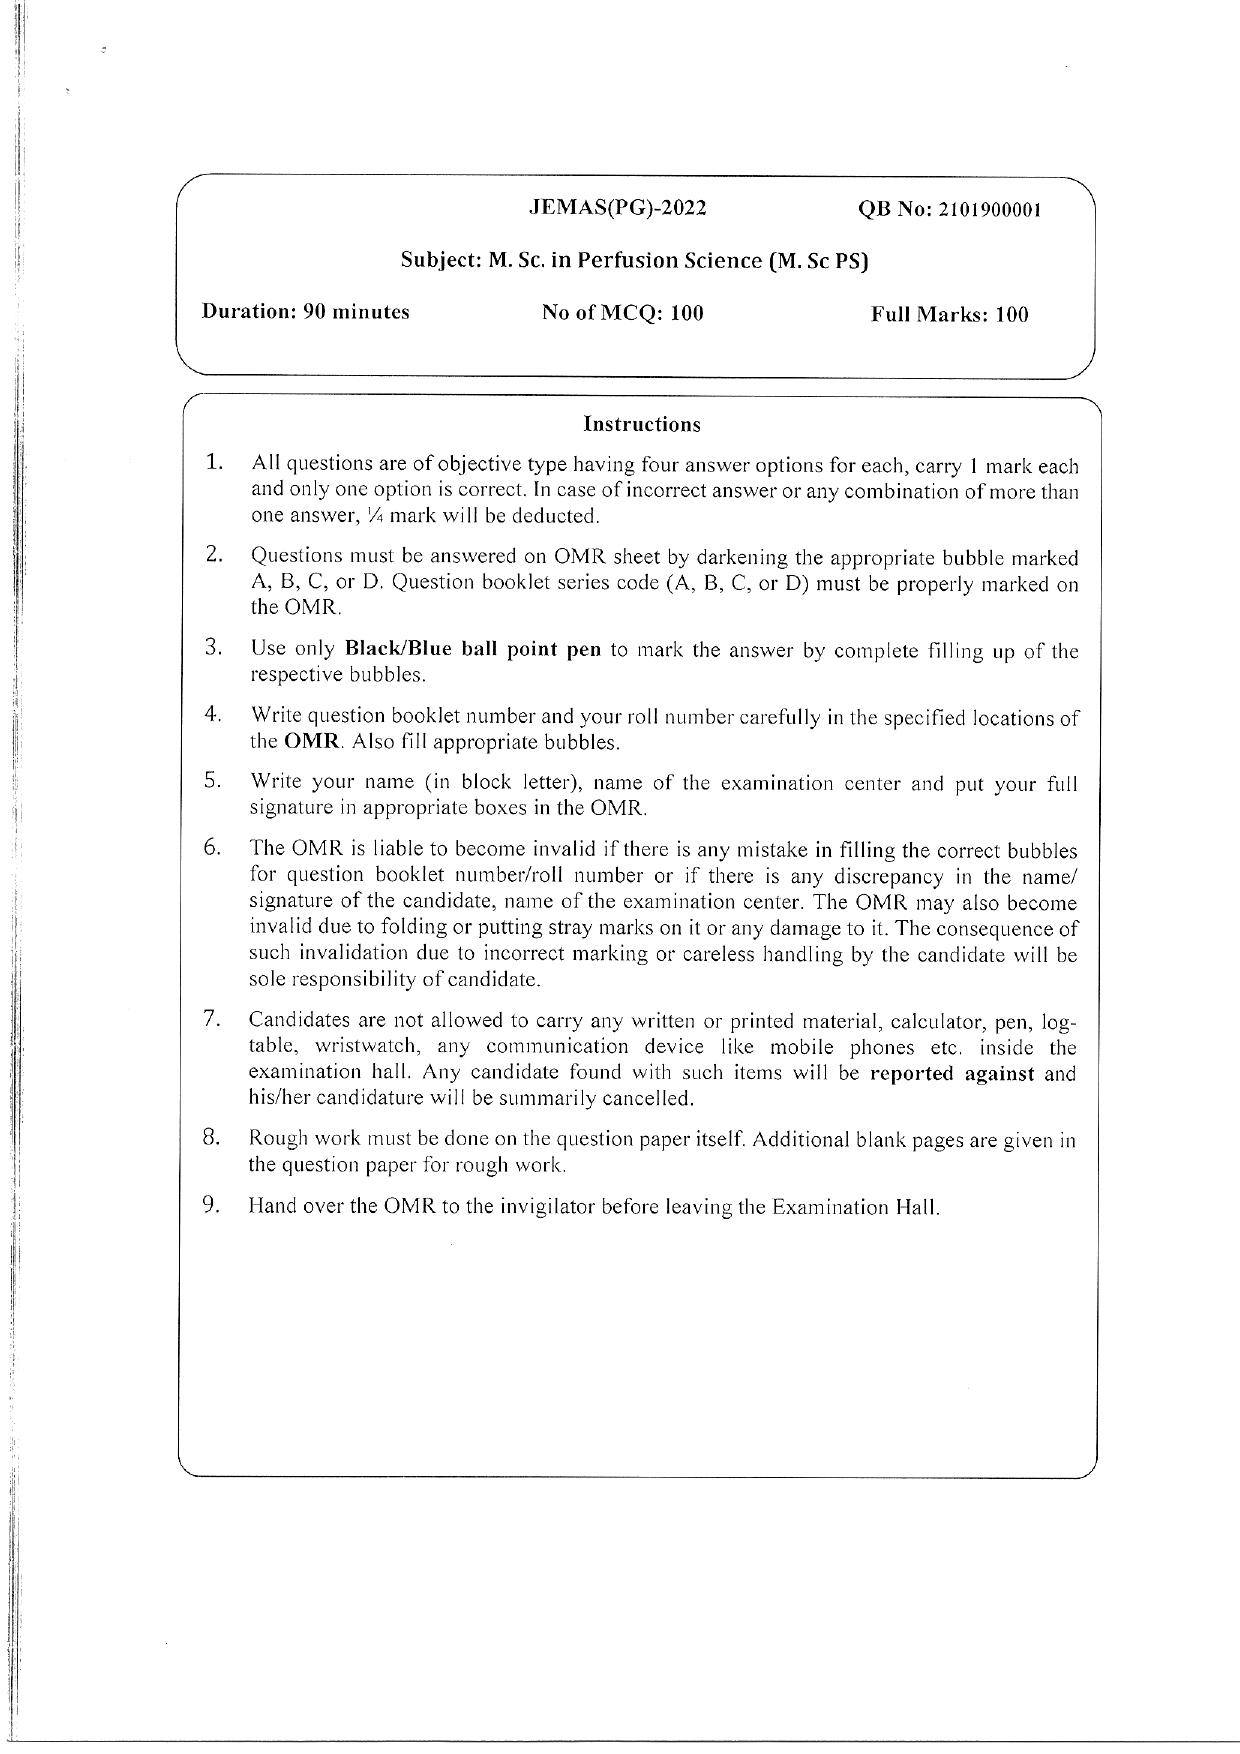 WBJEEB JEMAS (PG) 2022 MSc PS Question Paper - Page 1